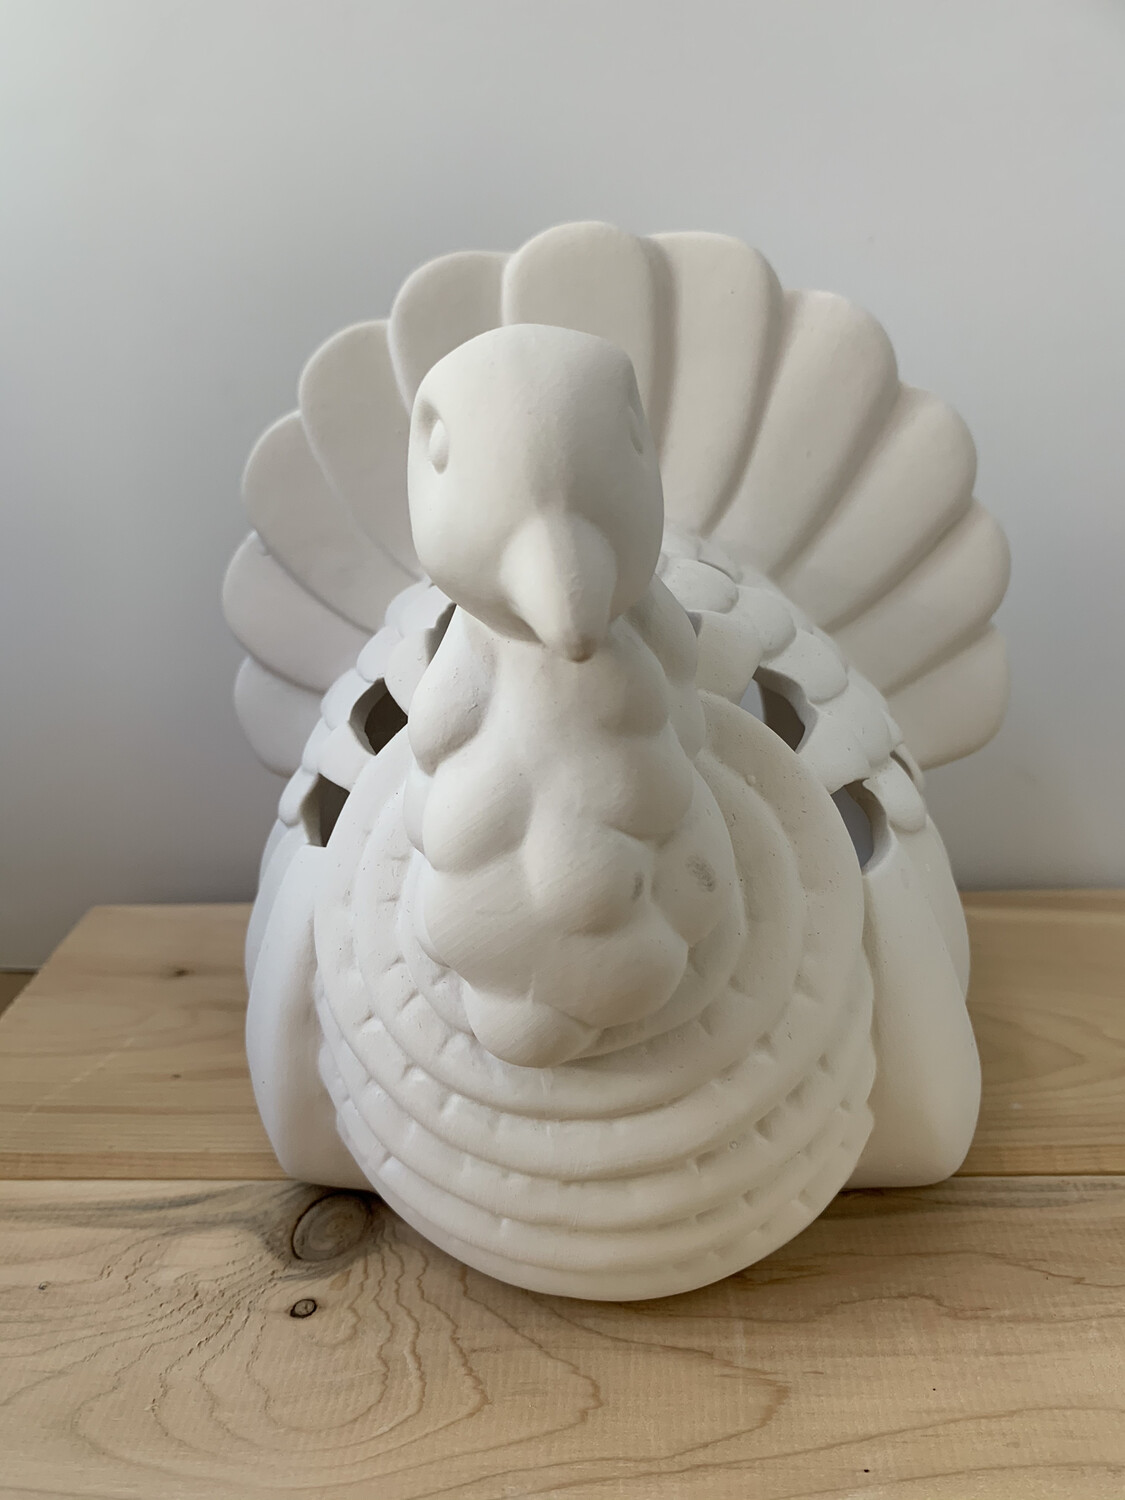 Paint Your Own Pottery - Ceramic Turkey Luminary Lantern Painting Kit